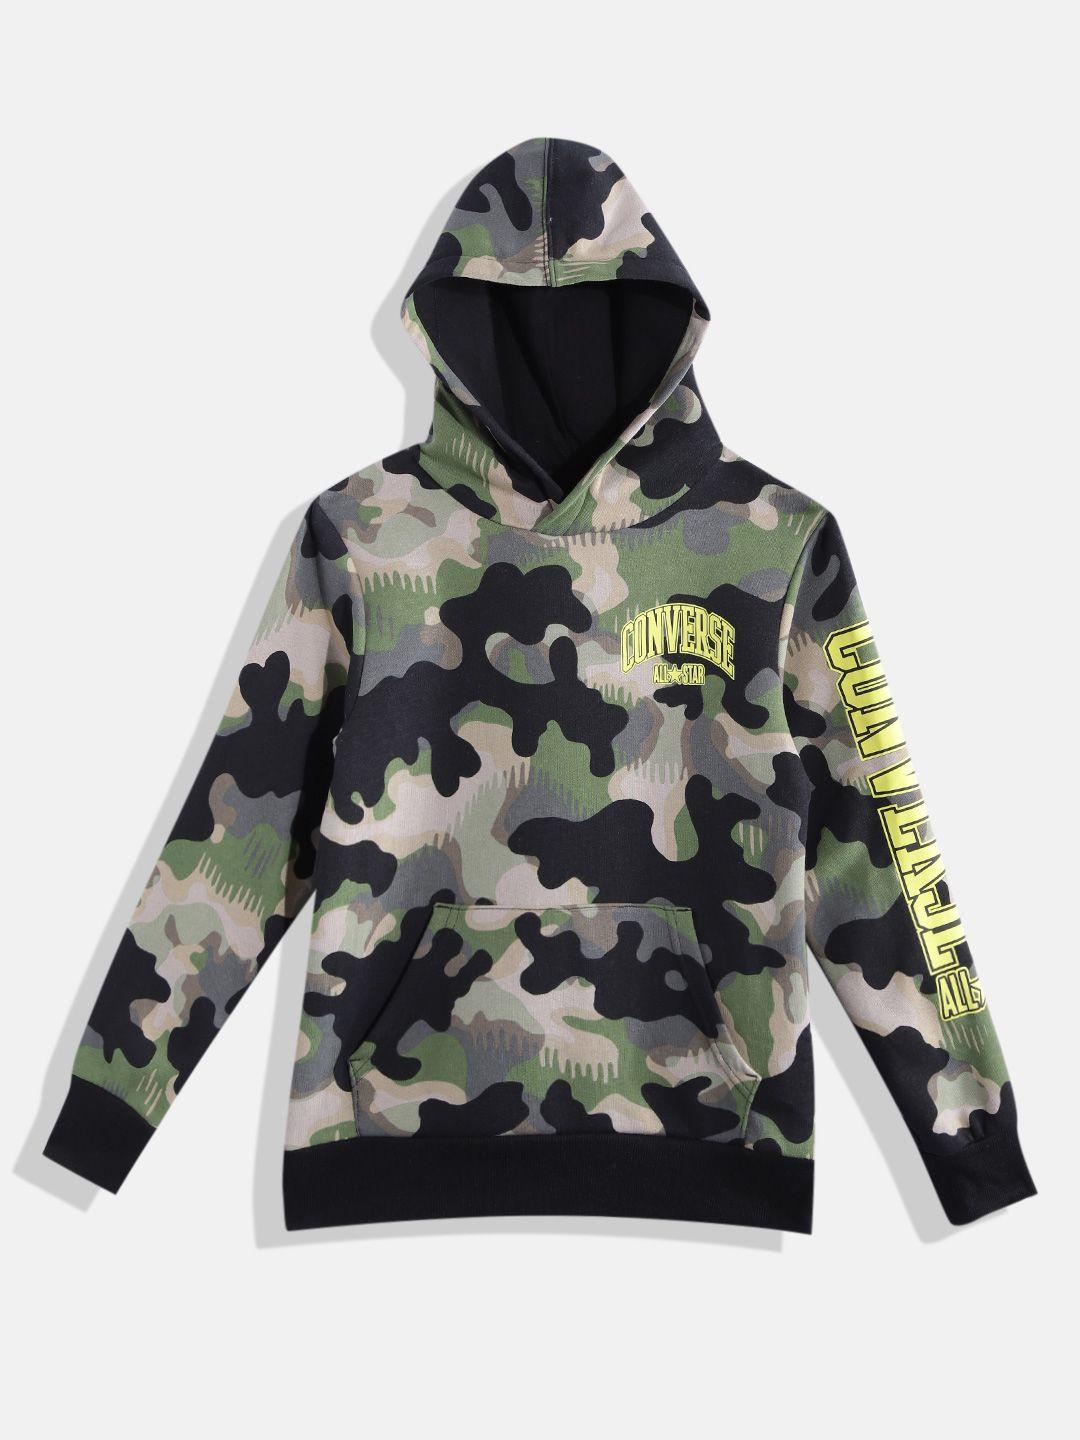 converse boys black & green printed hooded sweatshirt